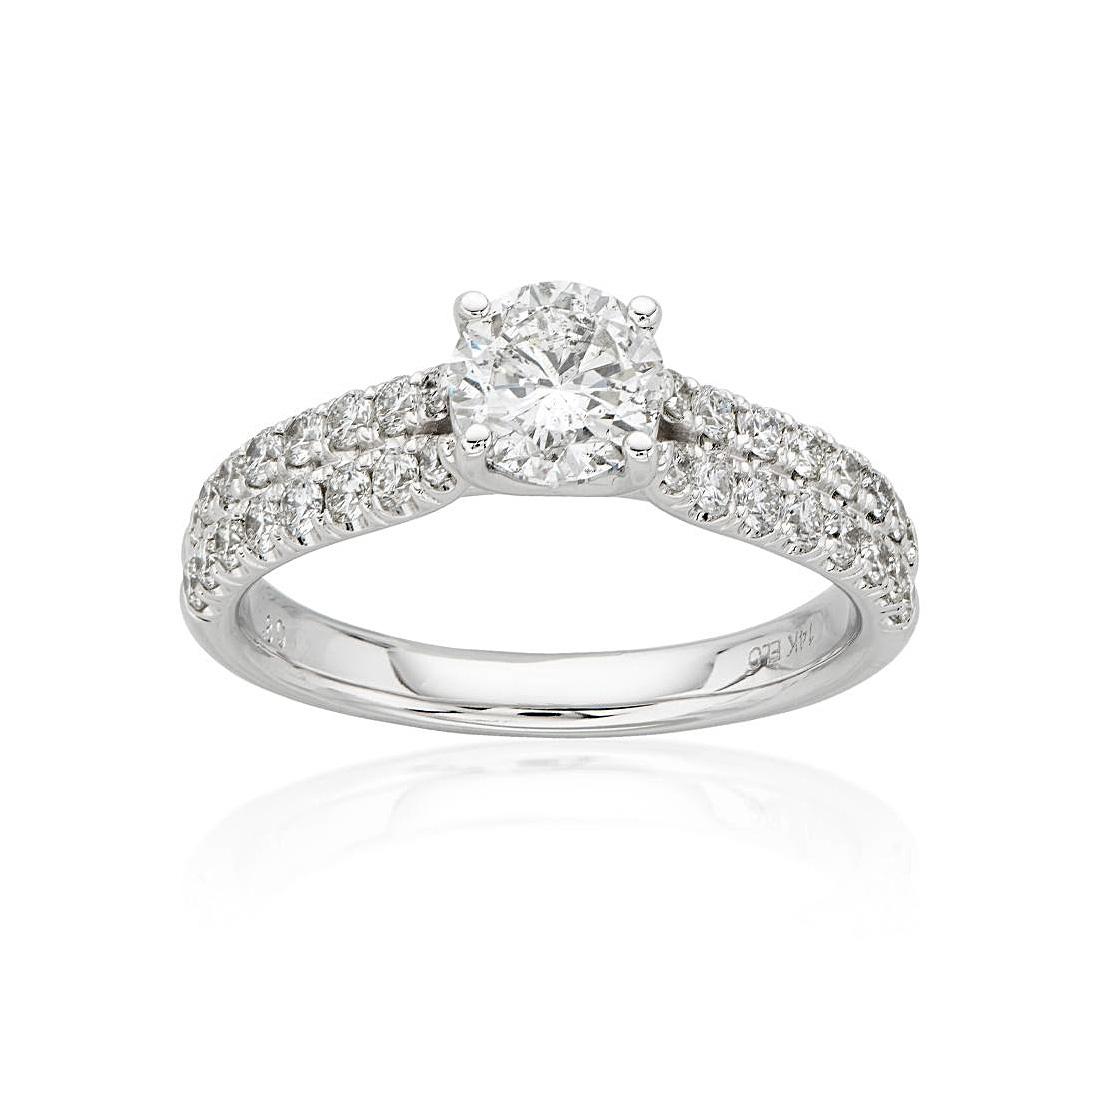 White Gold 1.30 CTW Diamond Engagement Ring with Round Diamond Center